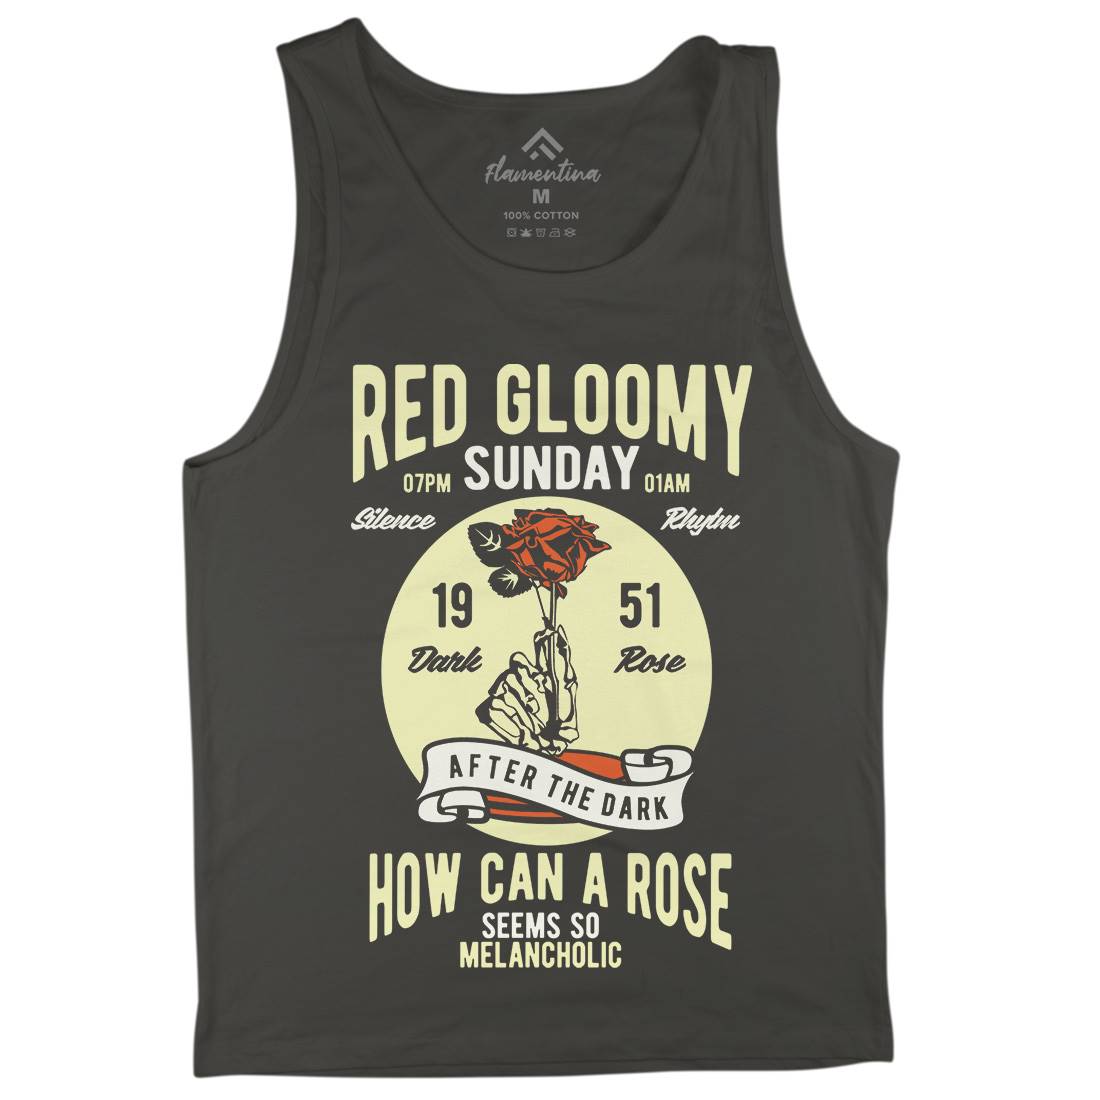 Red Gloomy Sunday Mens Tank Top Vest Retro B437